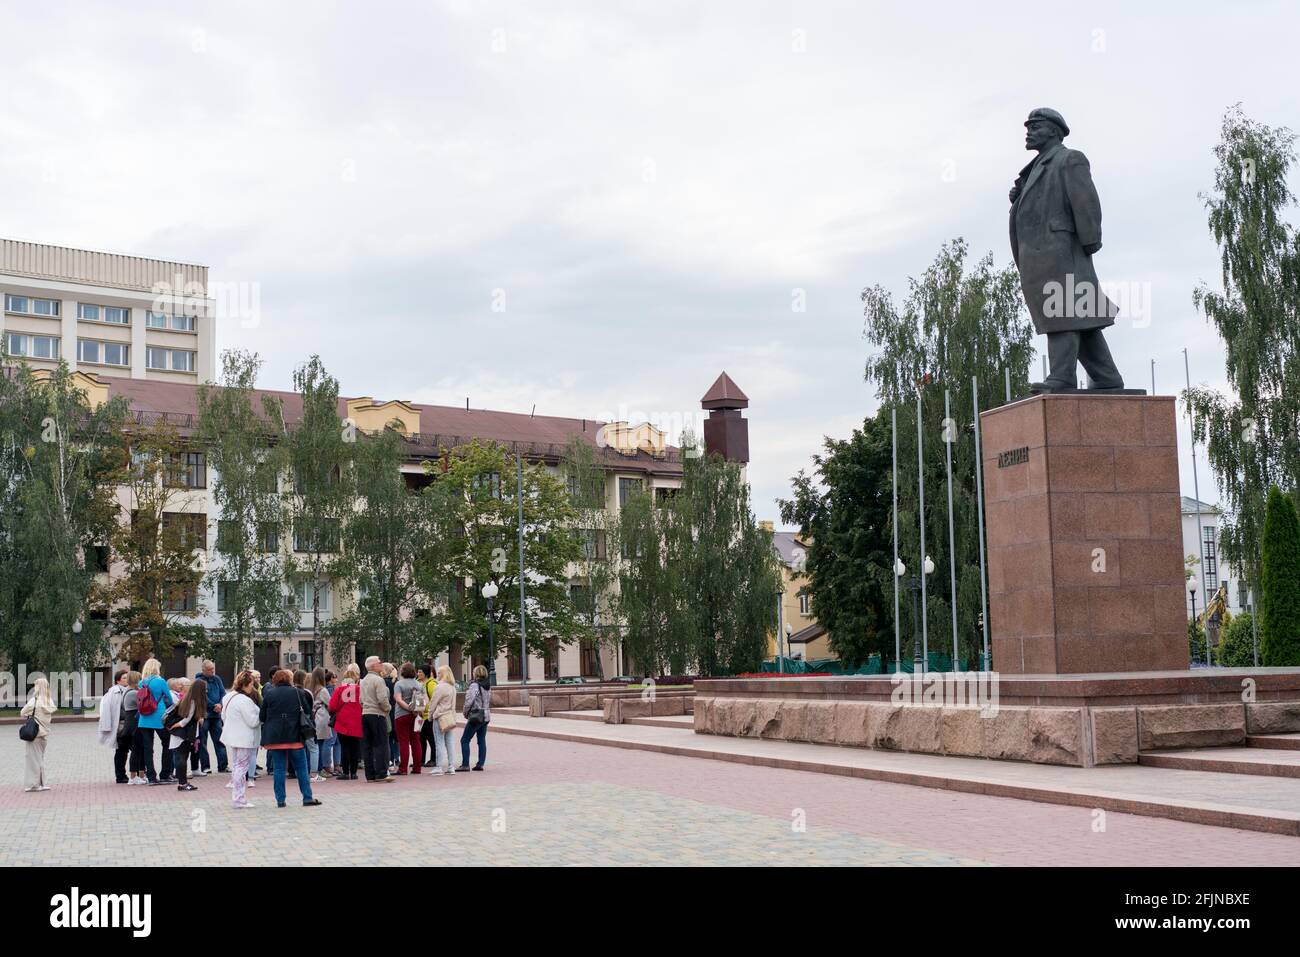 Grodno, Belarus - September 2, 2017: Group of lithuanian tourists standing near statue of Lenin in Grodno city center. Stock Photo